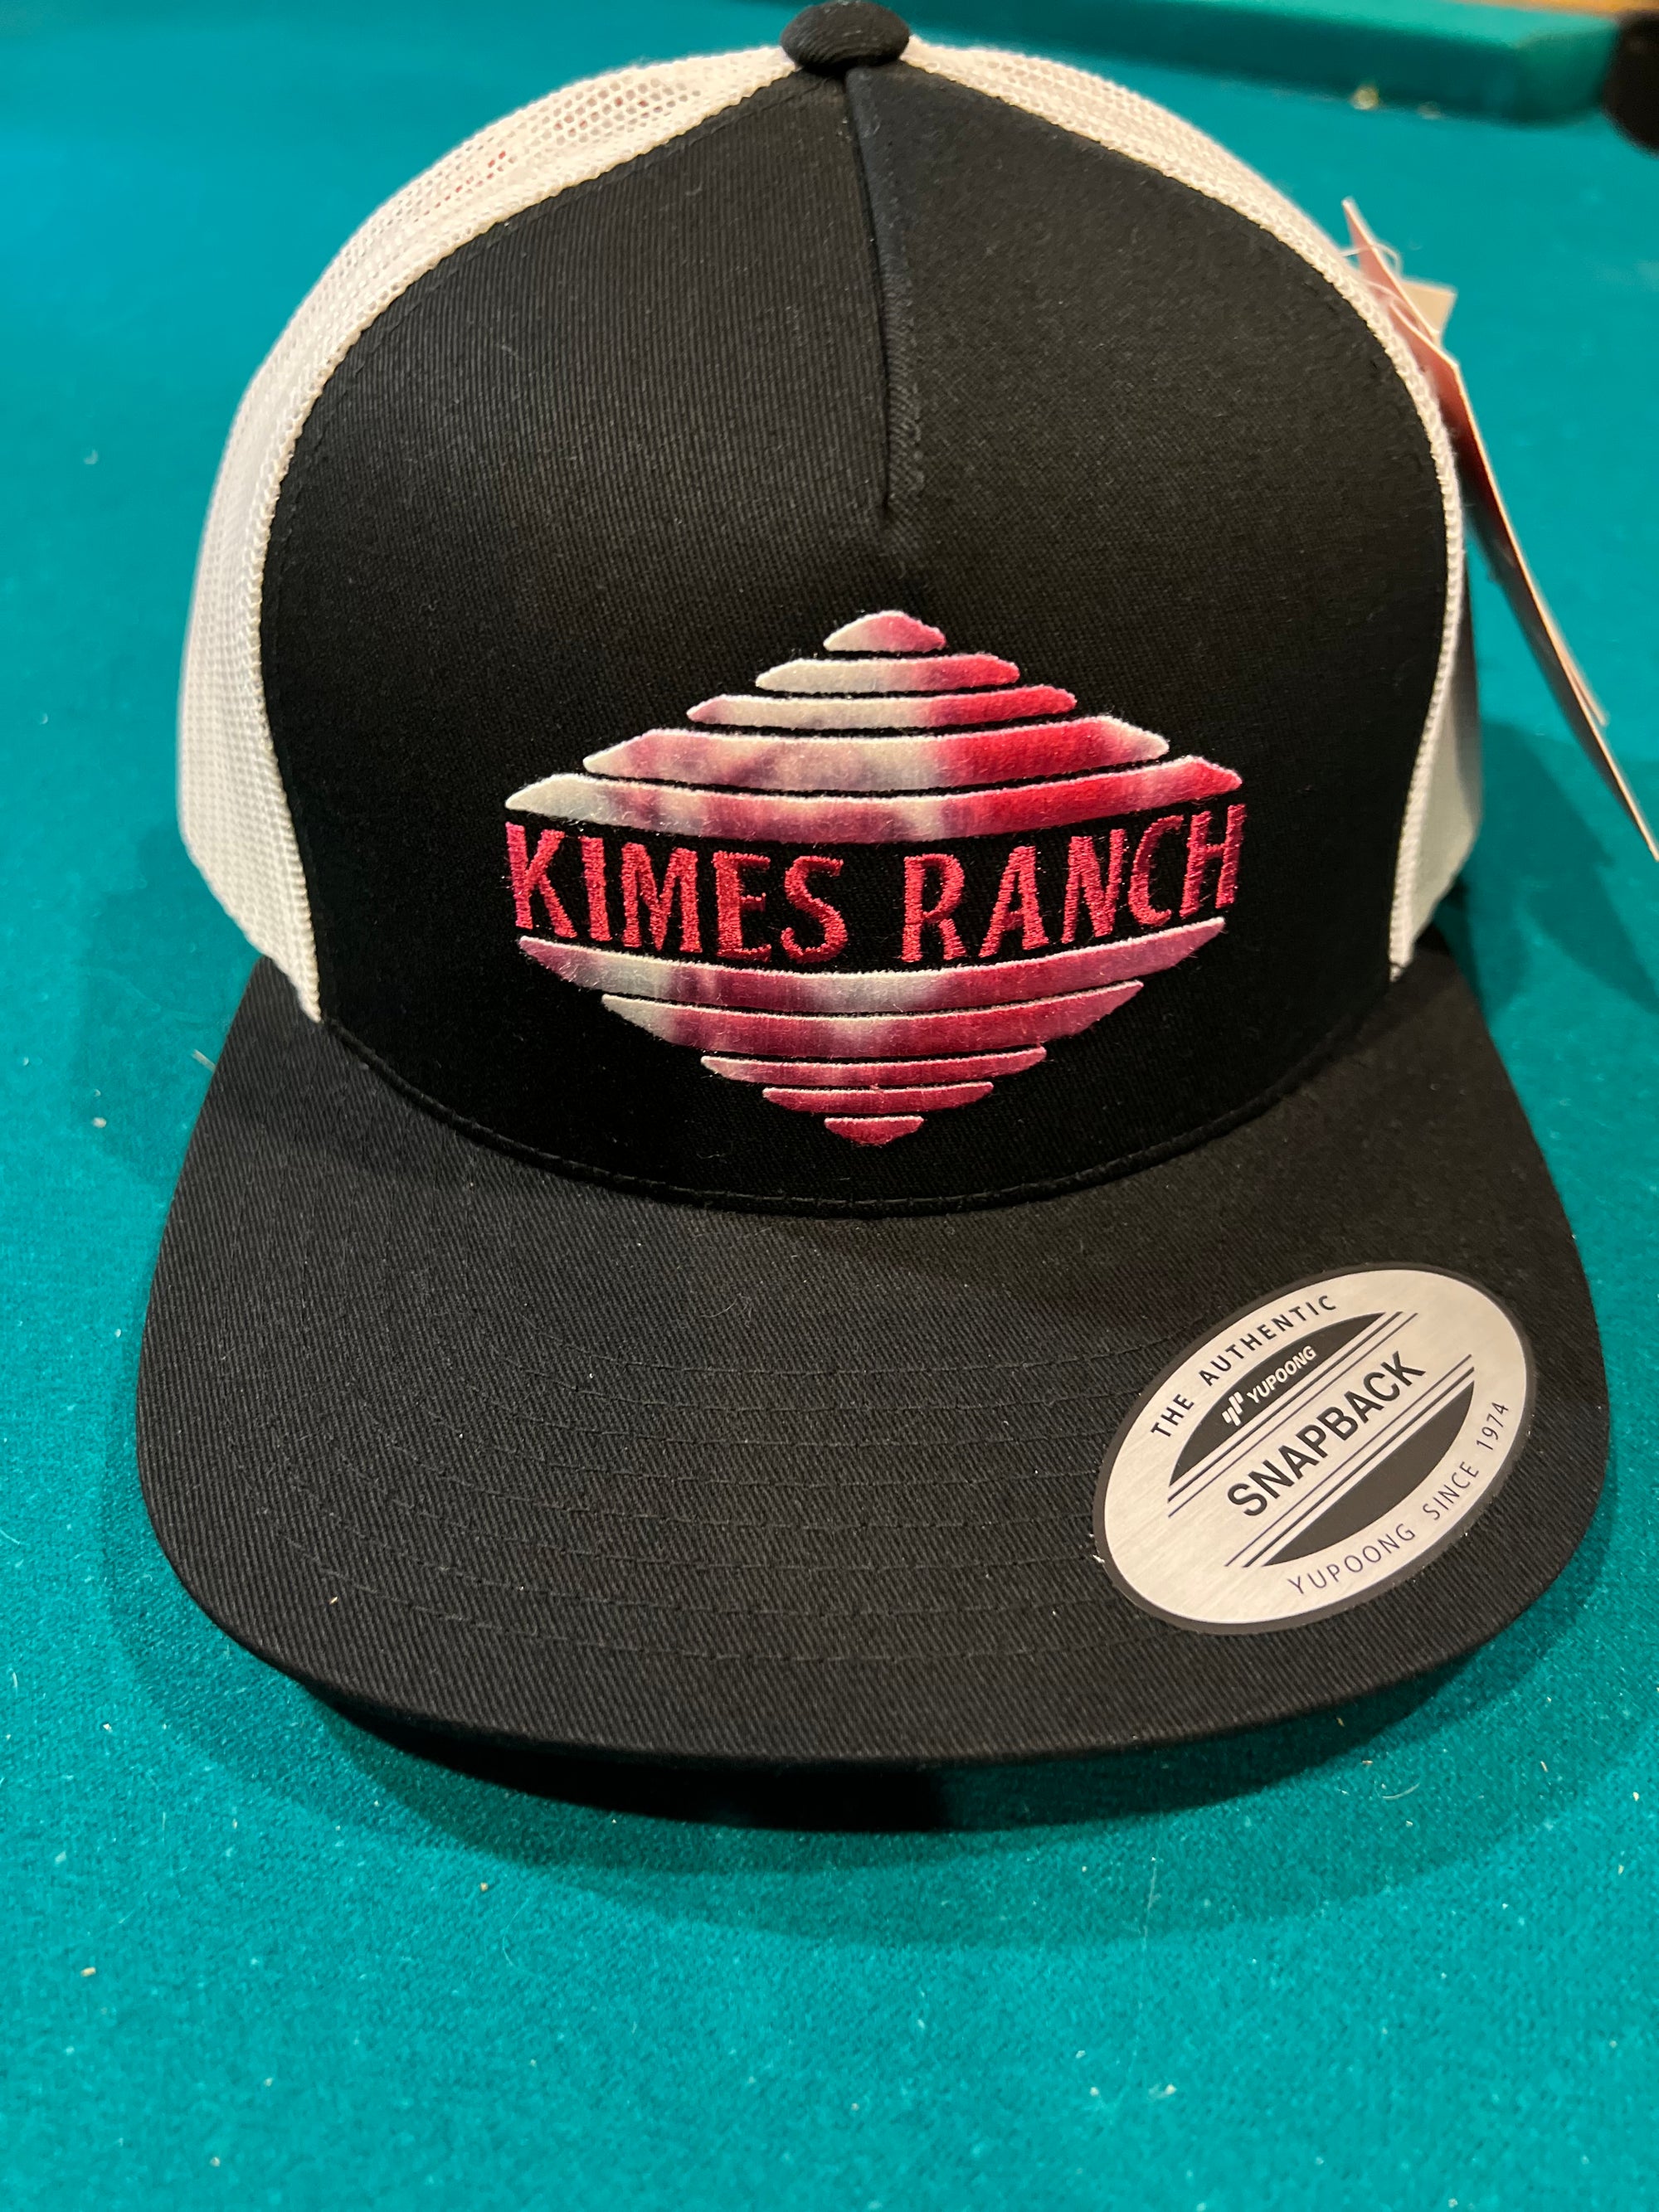 Kimes Ranch Monterey Black-Caps-Branded Envy